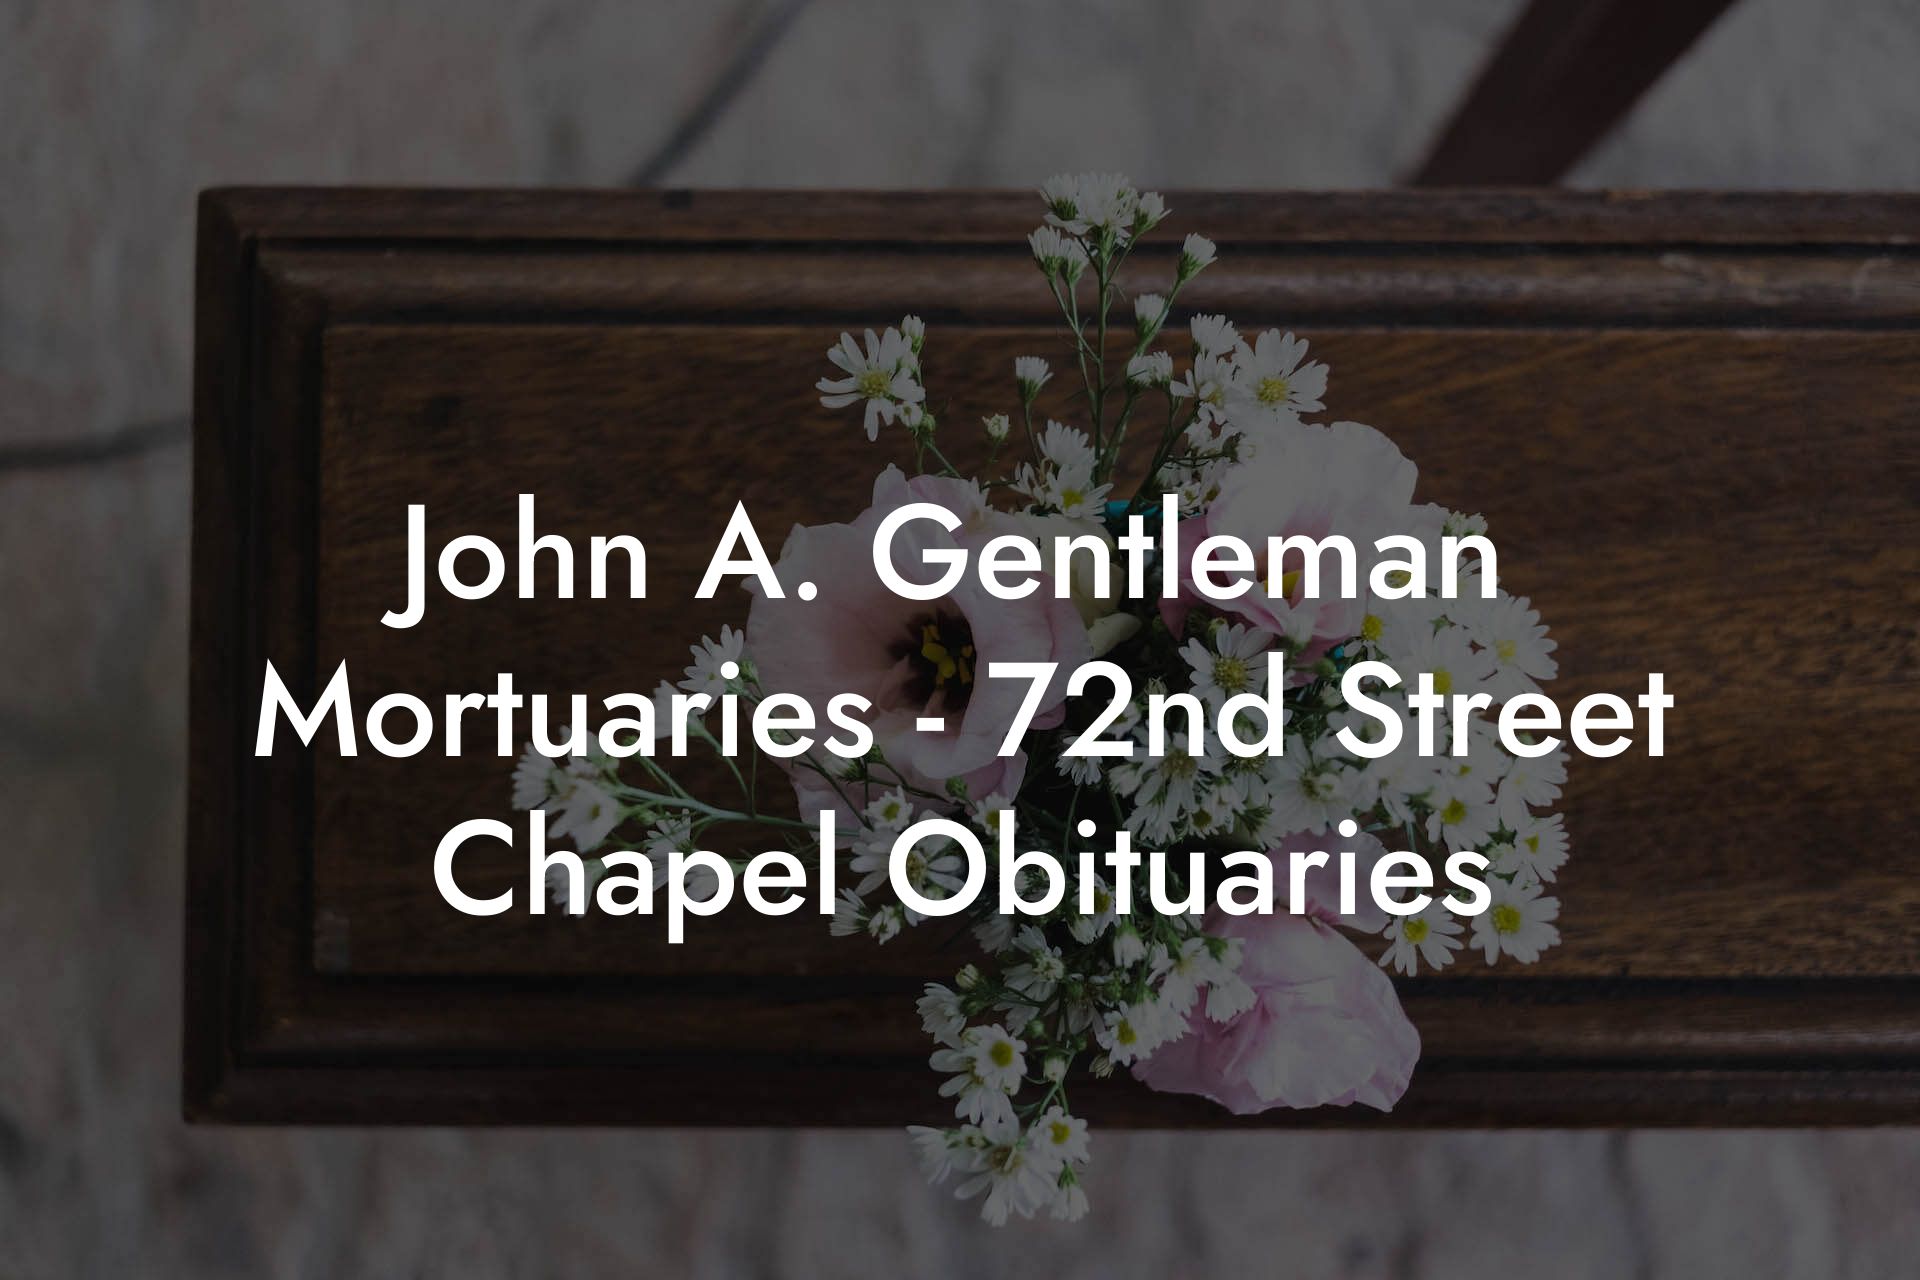 John A. Gentleman Mortuaries - 72nd Street Chapel Obituaries